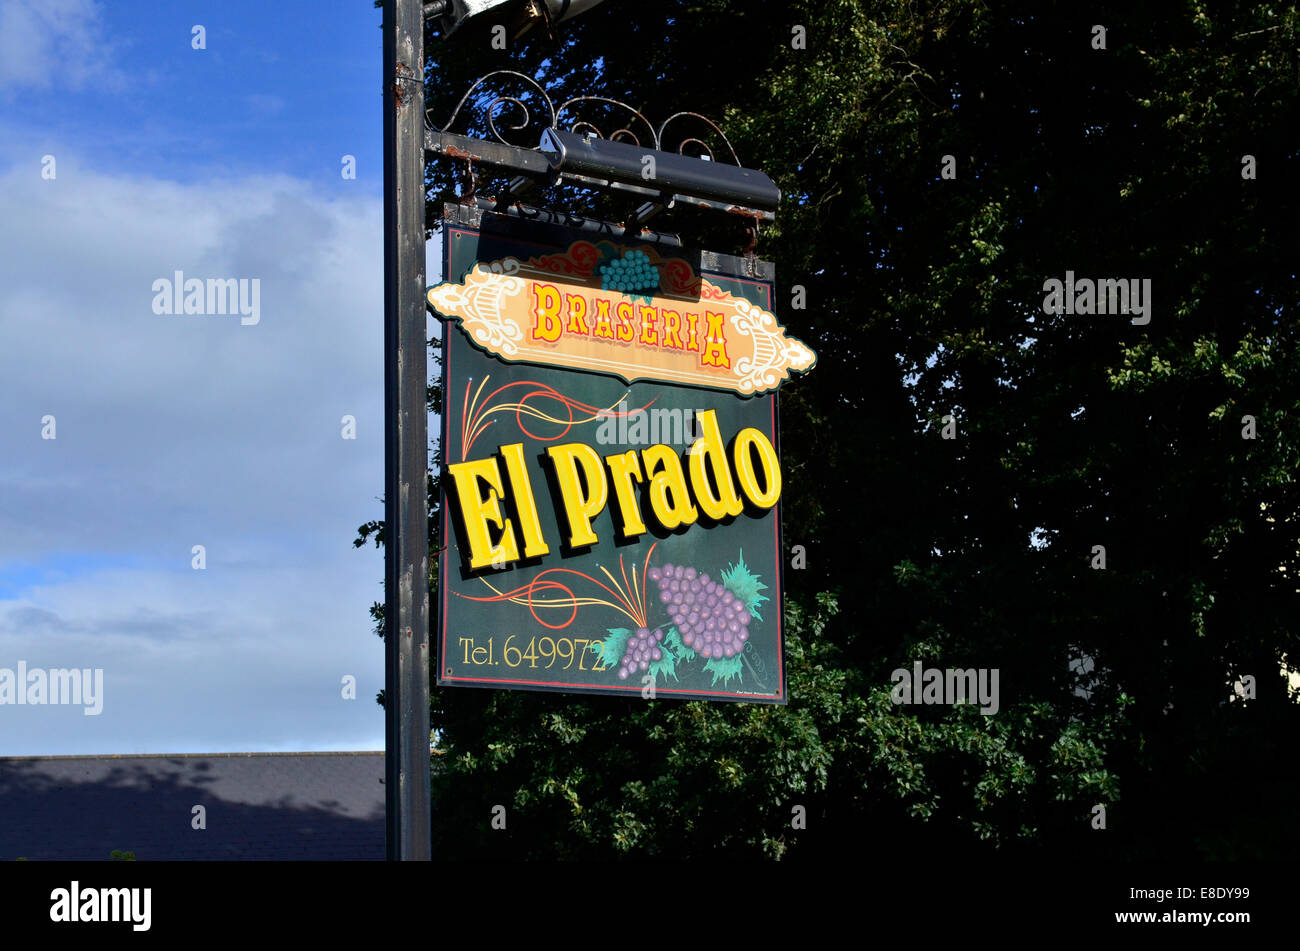 Braseria El Prado Spanish Restaurant, Laleston, near Bridgend, Mid Glamorgan, South Wales, UK Stock Photo